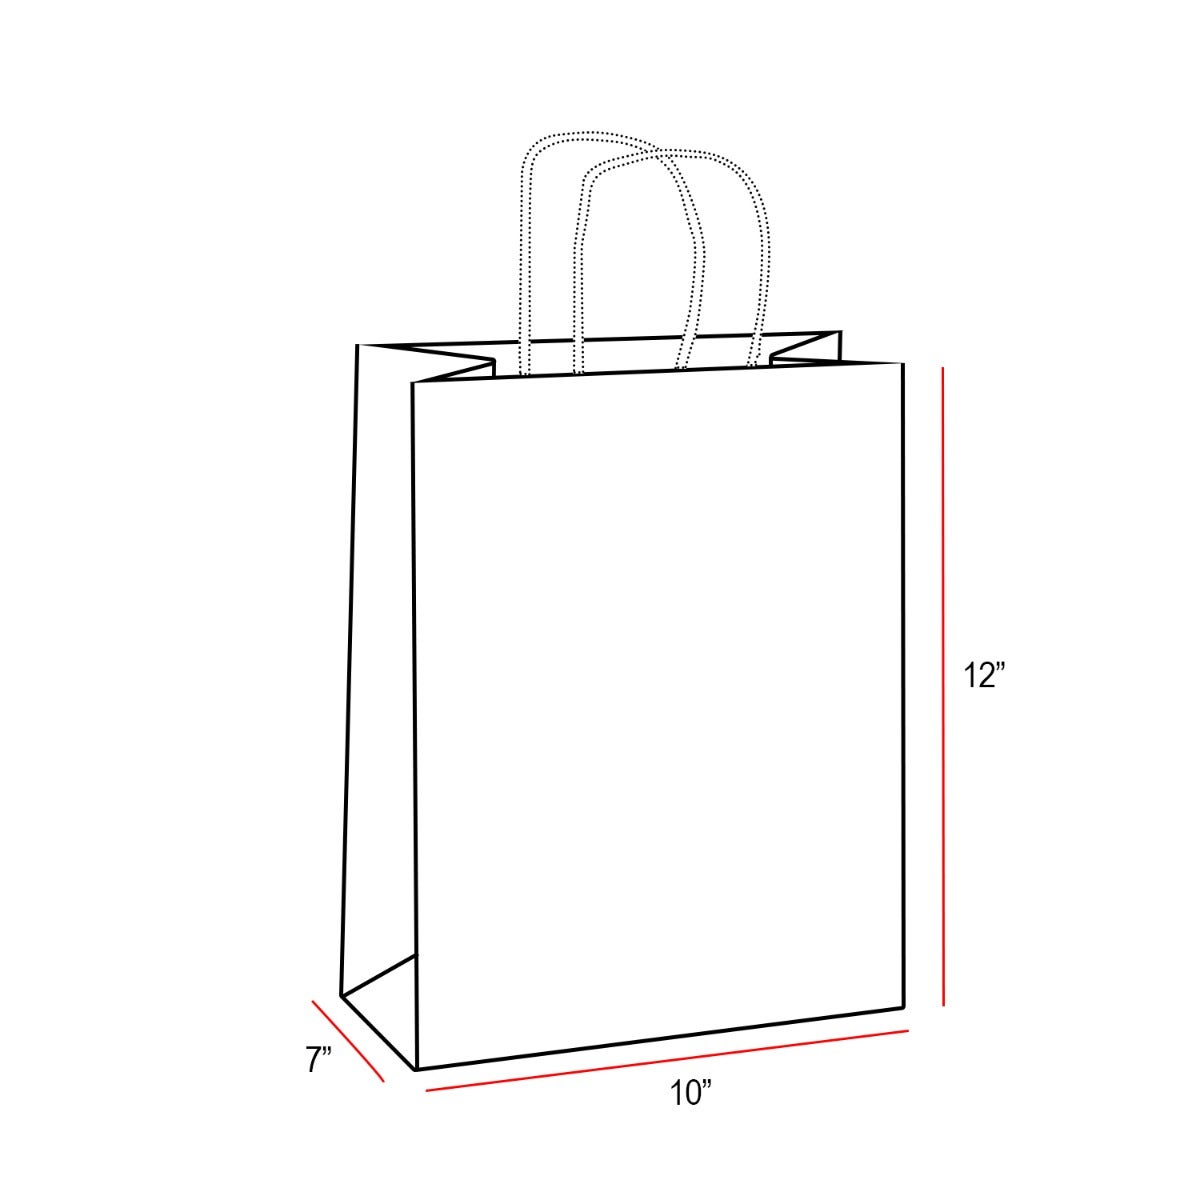 100% Recycled Paper Shopping Bags | Kraft Brown | Twisted Paper Handles - Eddie's Hang-Up Display Ltd.